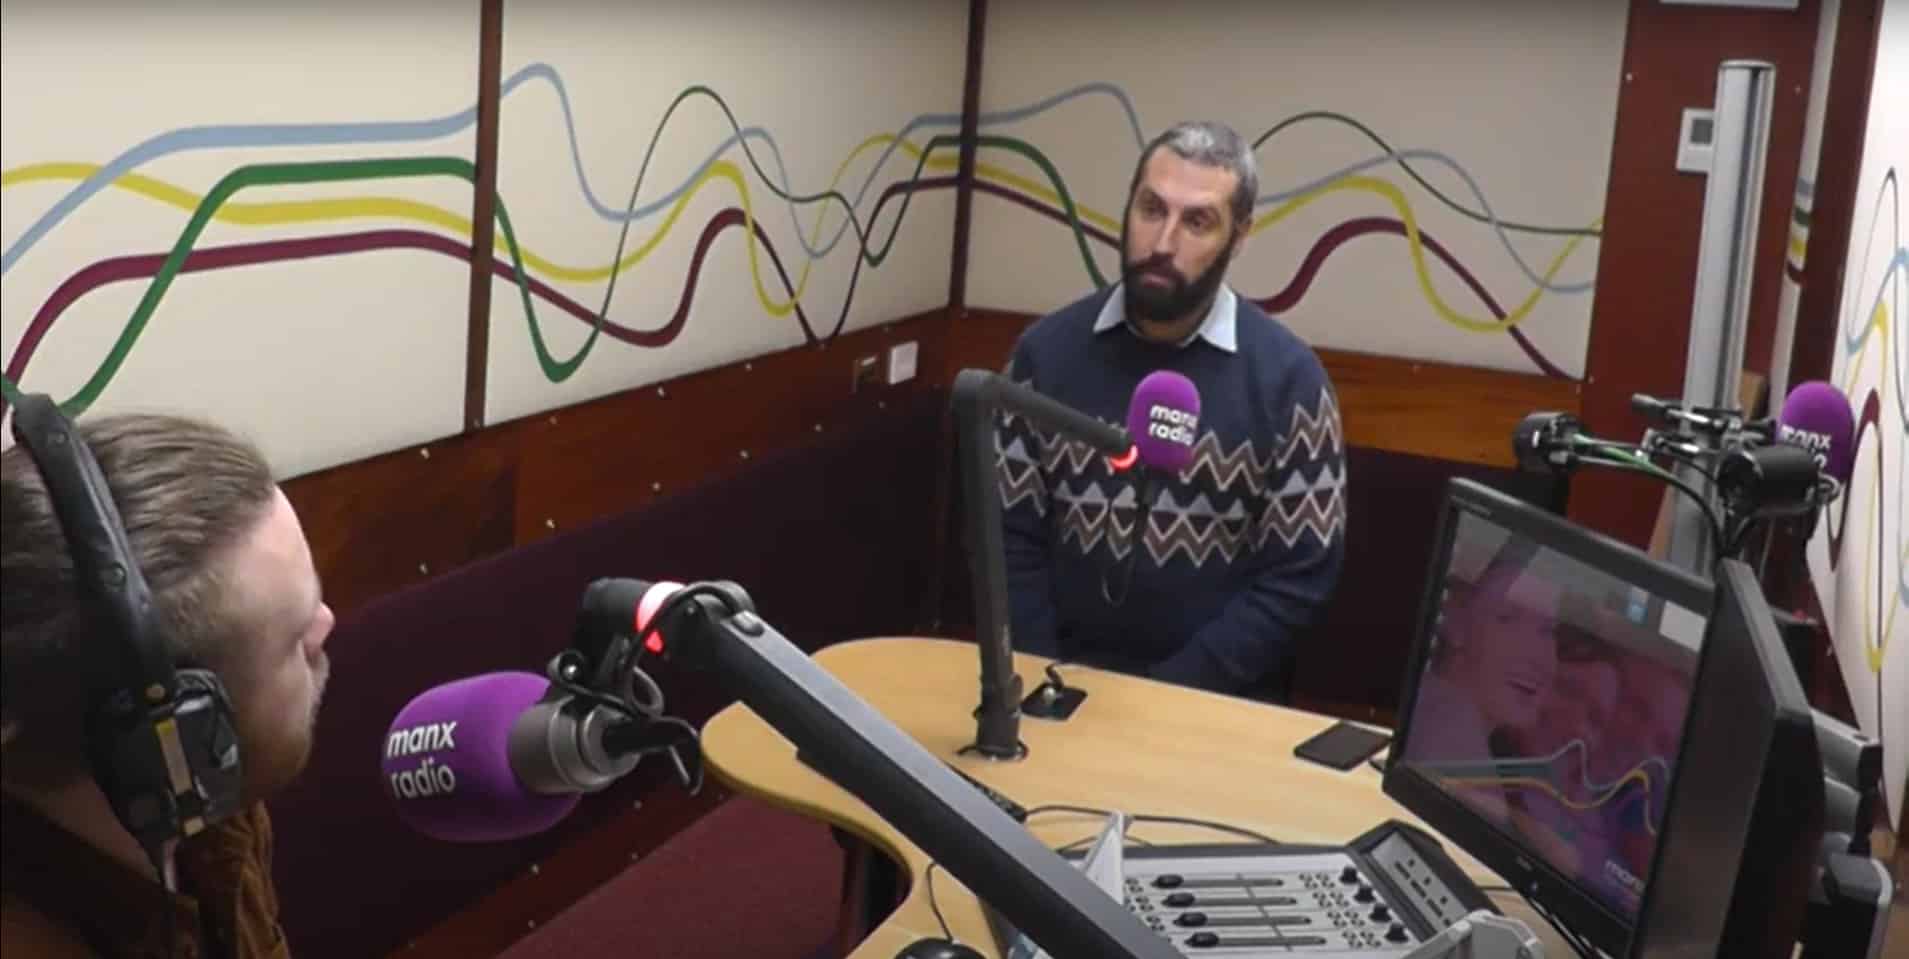 Josem in the Manx Radio studio discussing the Scheinberg case